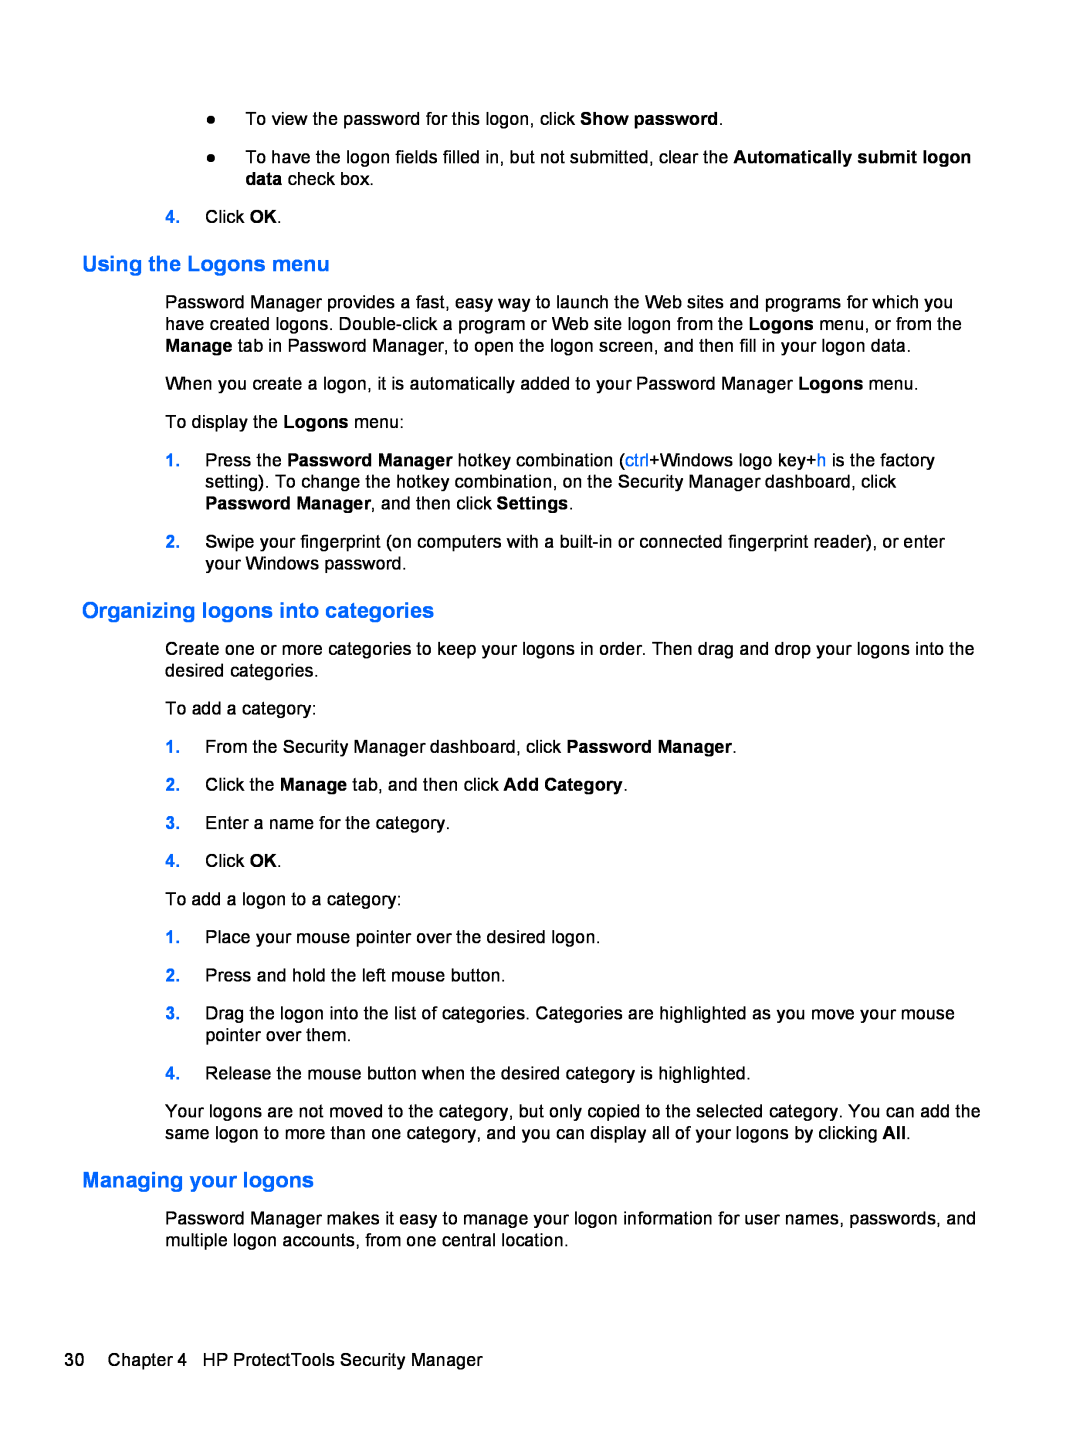 HP 2 Base Model manual Using the Logons menu, Organizing logons into categories, Managing your logons 